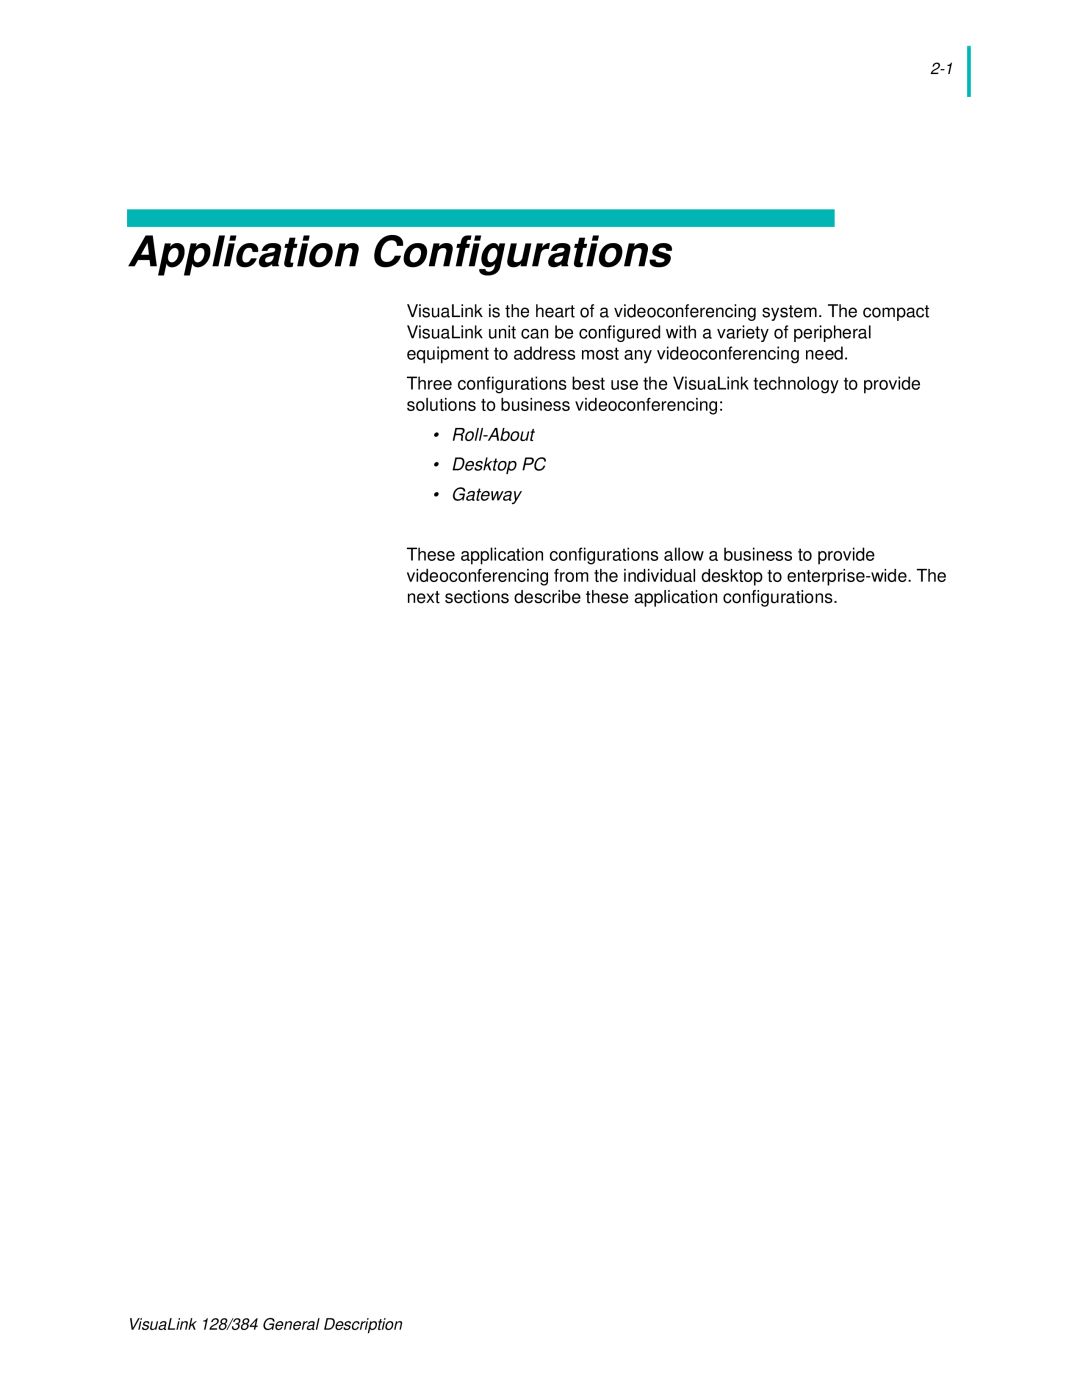 NEC 128 manual Application Configurations, Roll-About Desktop PC Gateway 